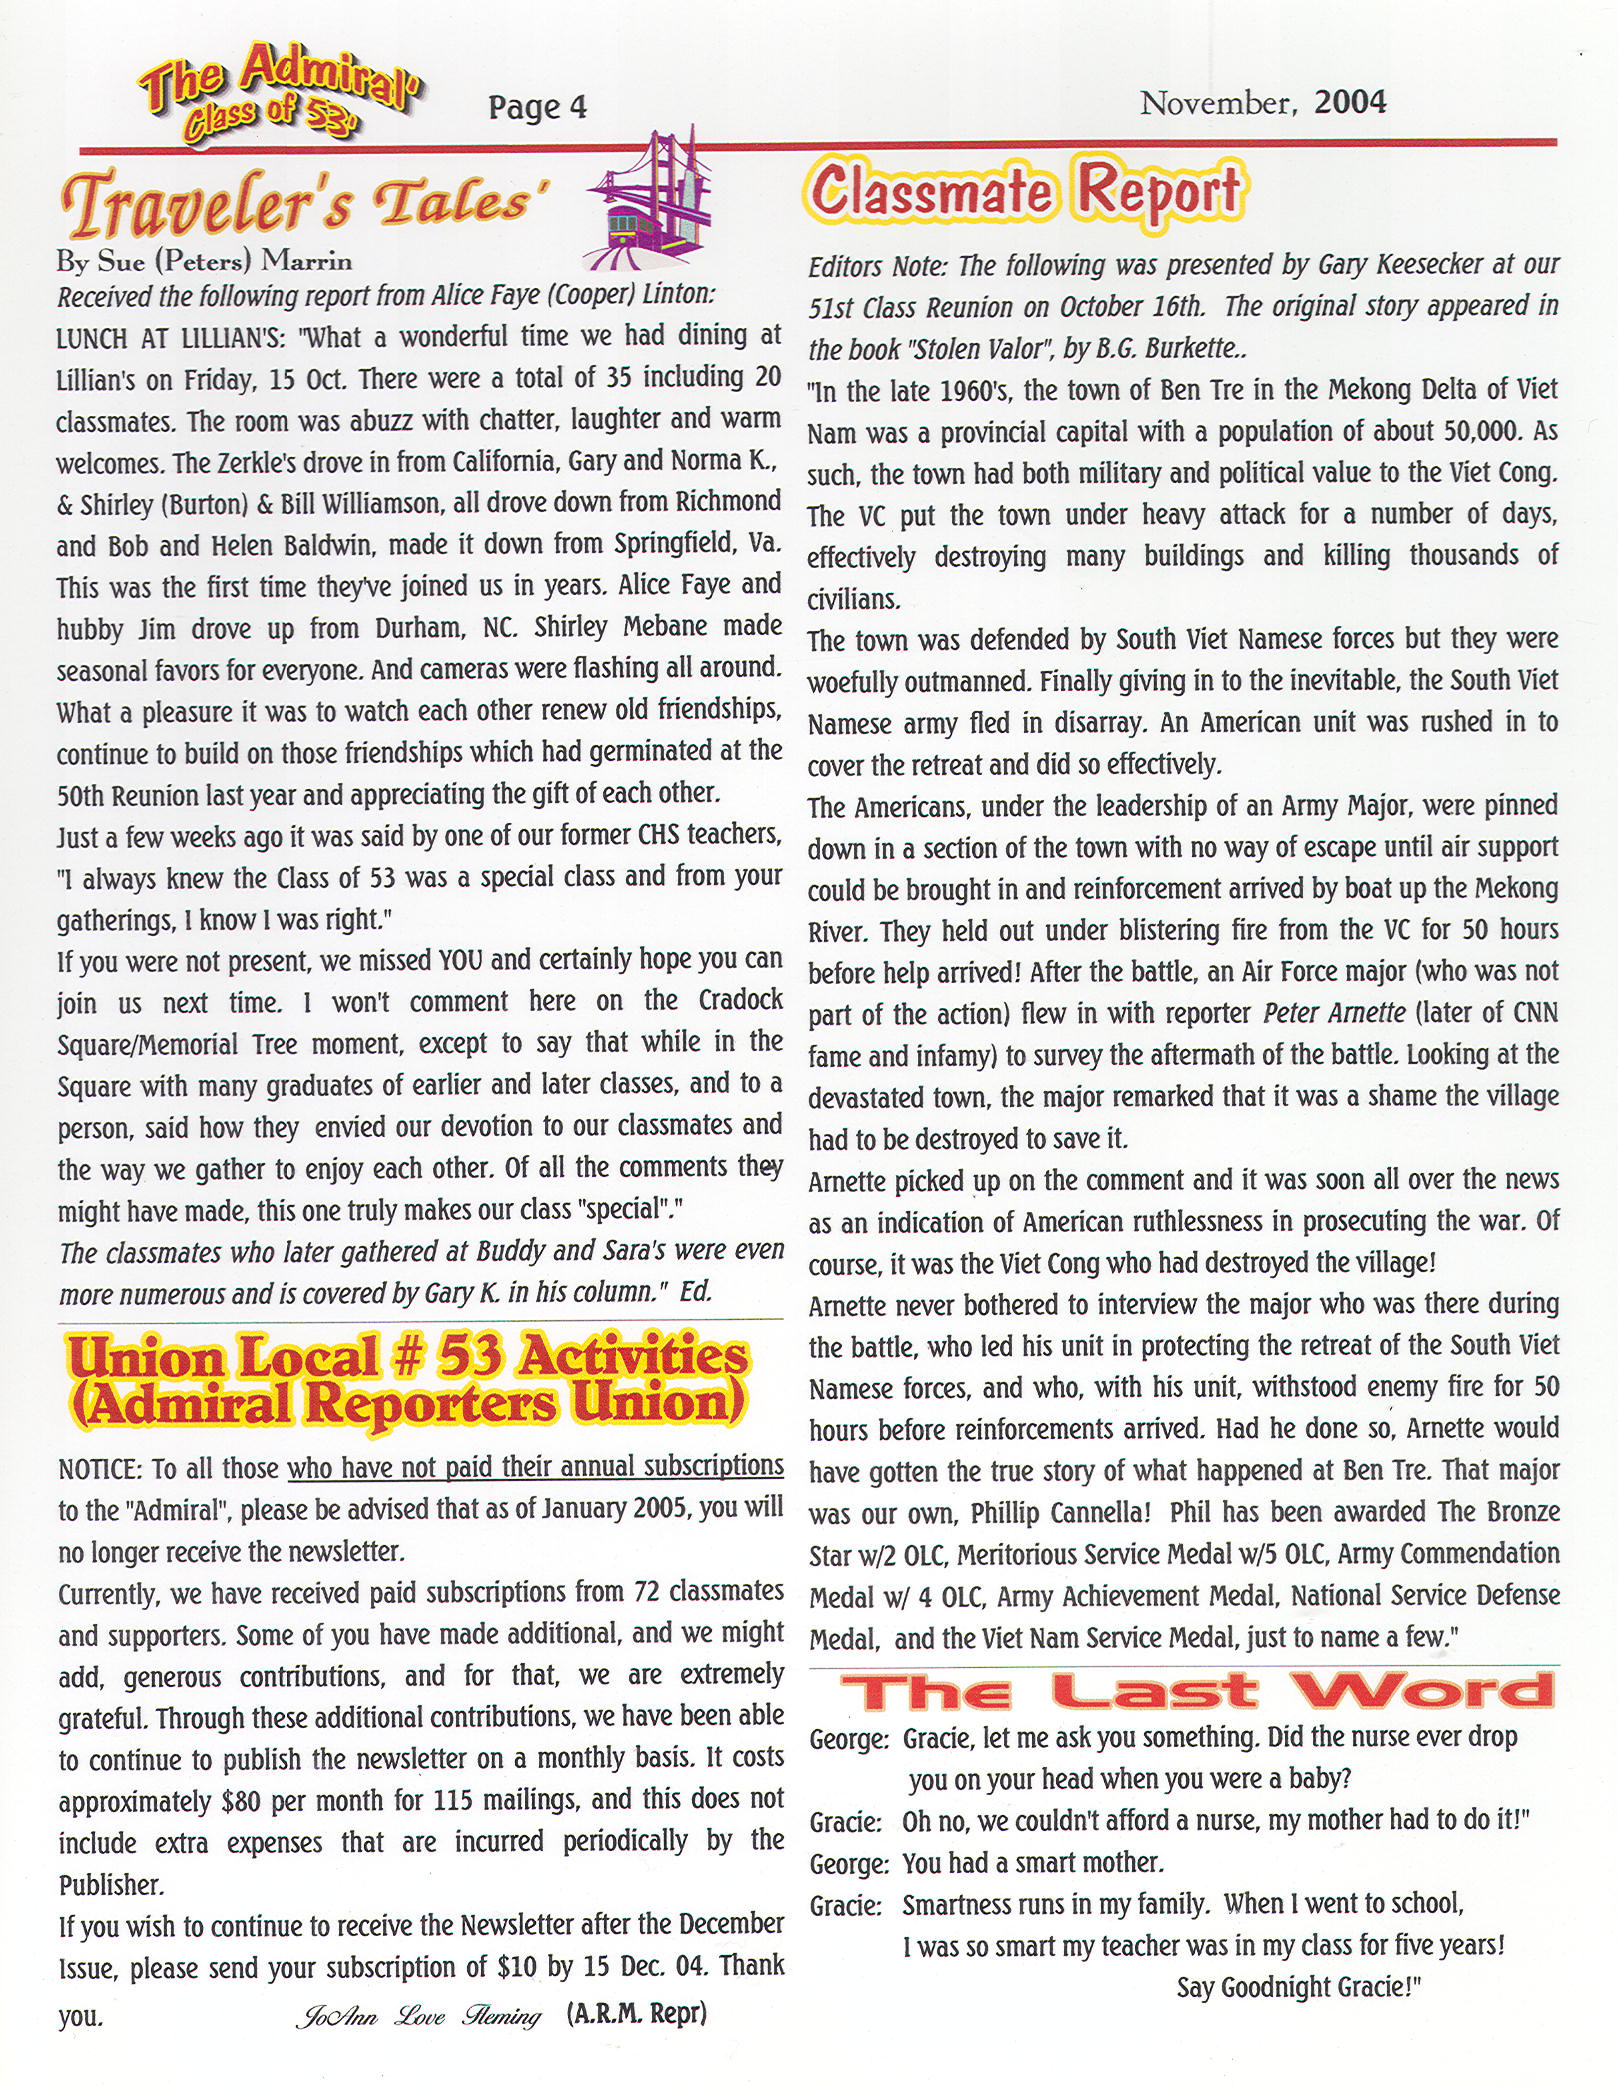 The Admiral - November 2004 - pg. 4